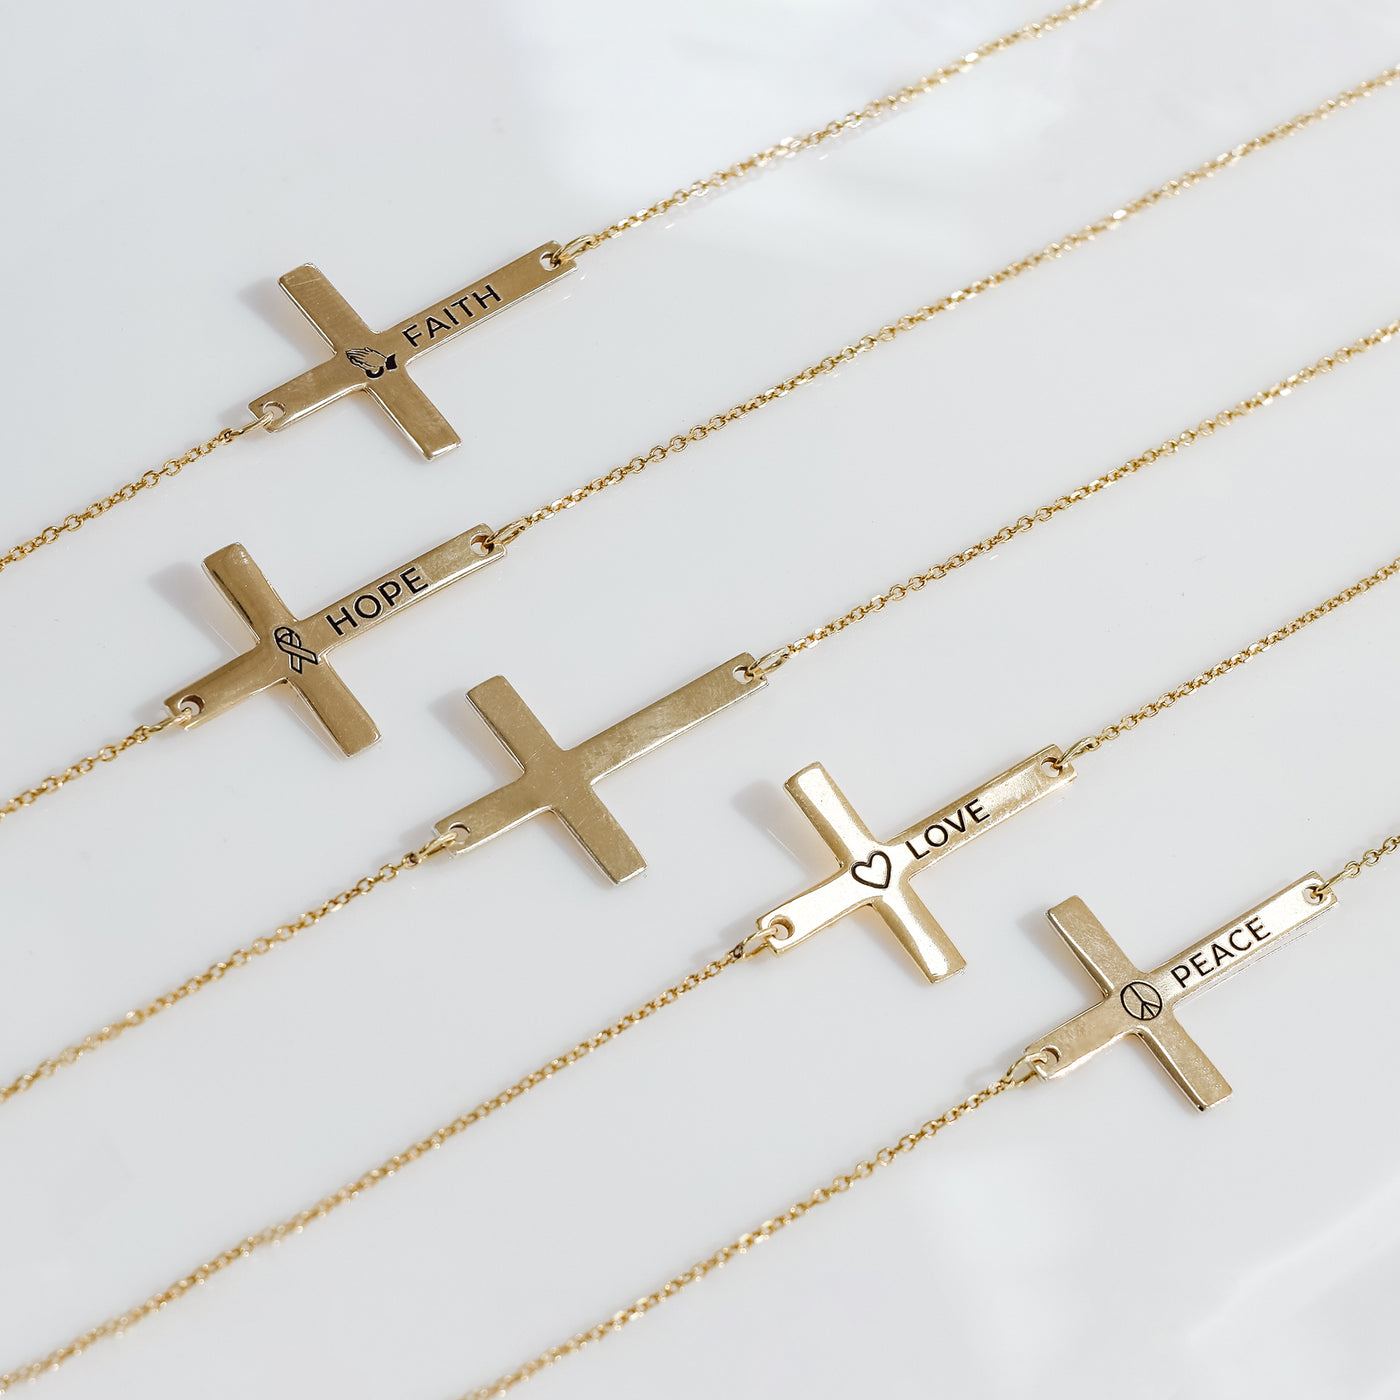 Inscribed Sideways Cross Pendant Necklace - Gloria Jewels